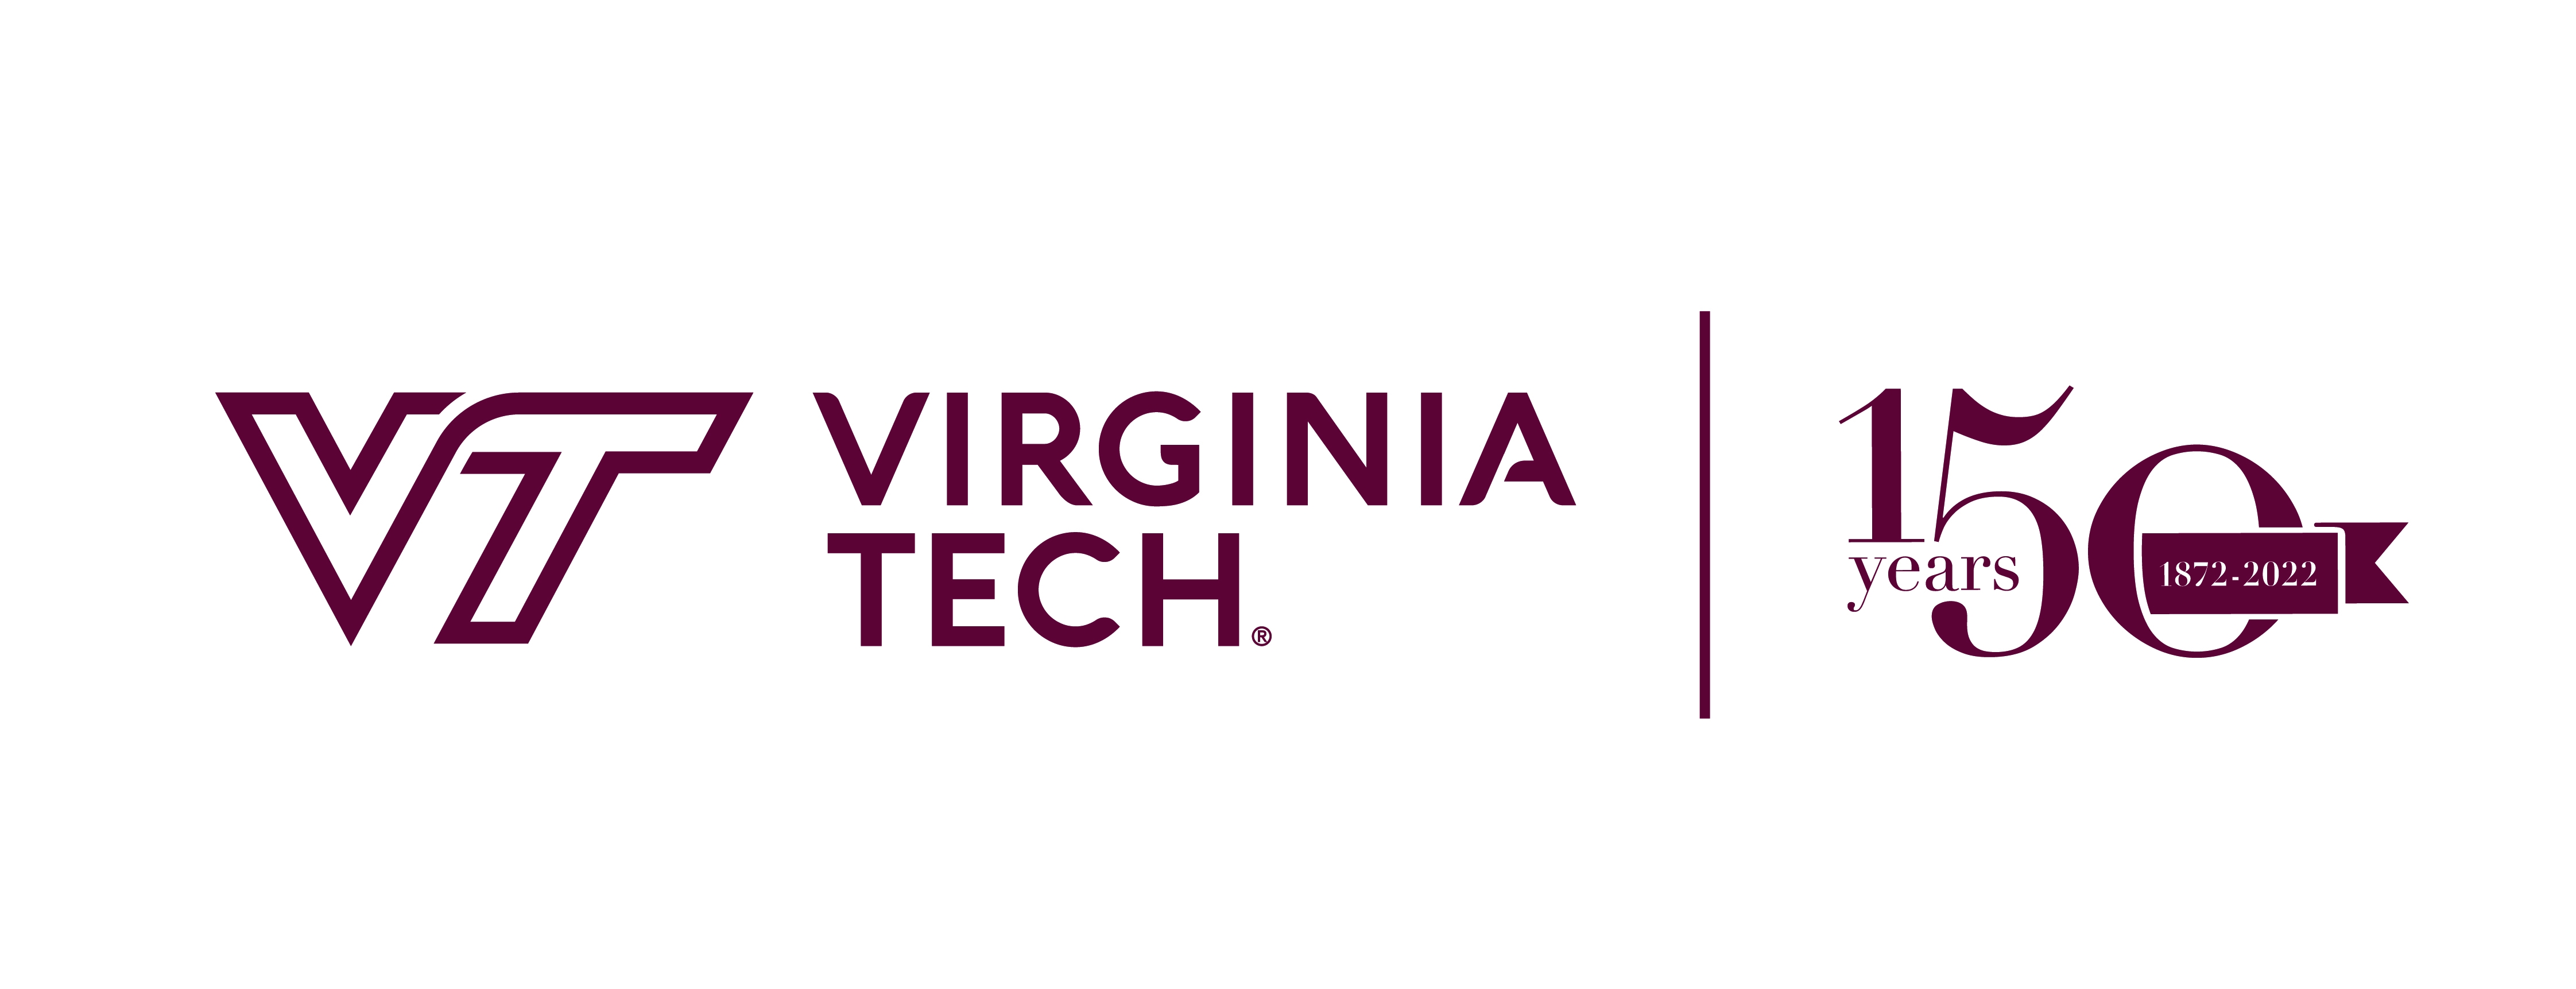 Virginia Tech sesqui logo